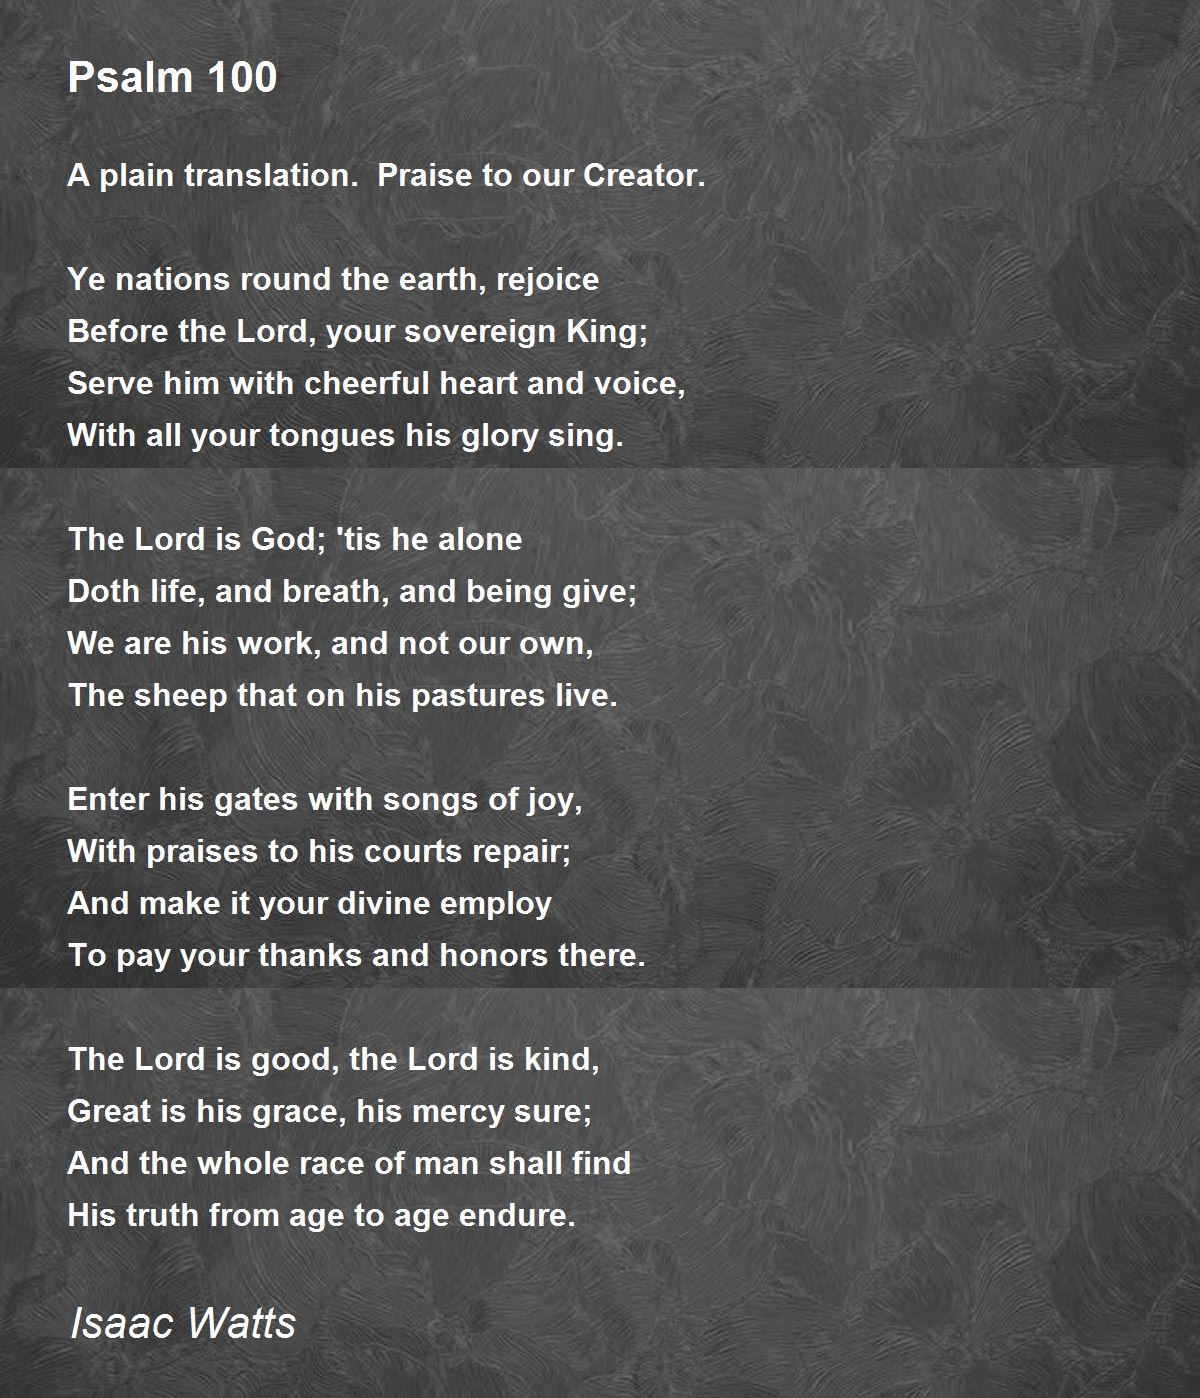 Psalm 100 Poem by Isaac Watts - Poem Hunter